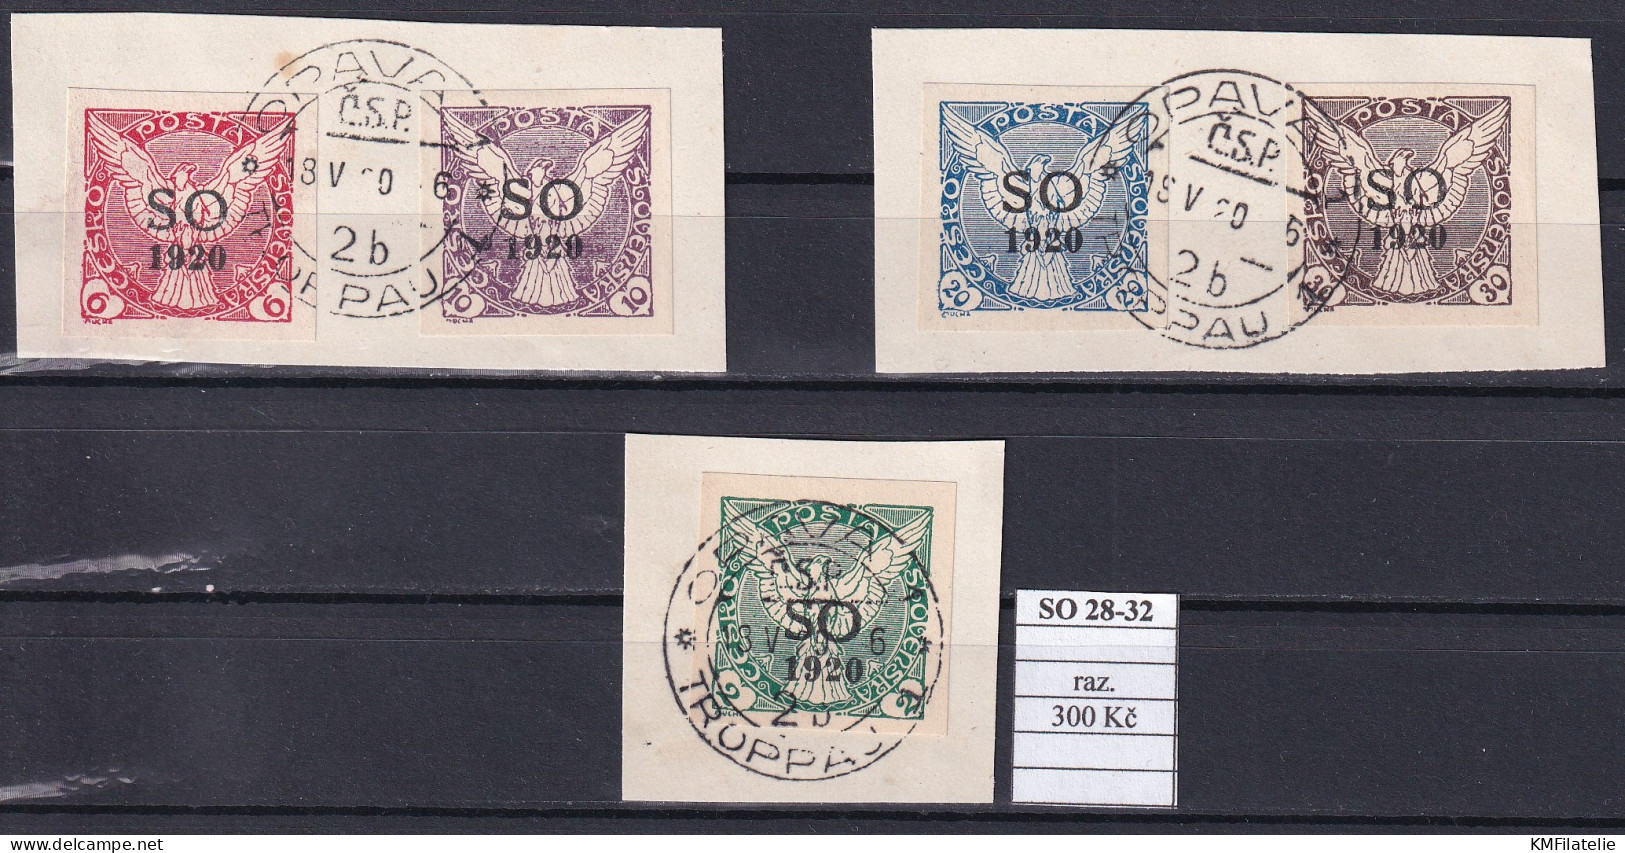 Czechoslovakia Pofis SO 28-32 Used - Used Stamps